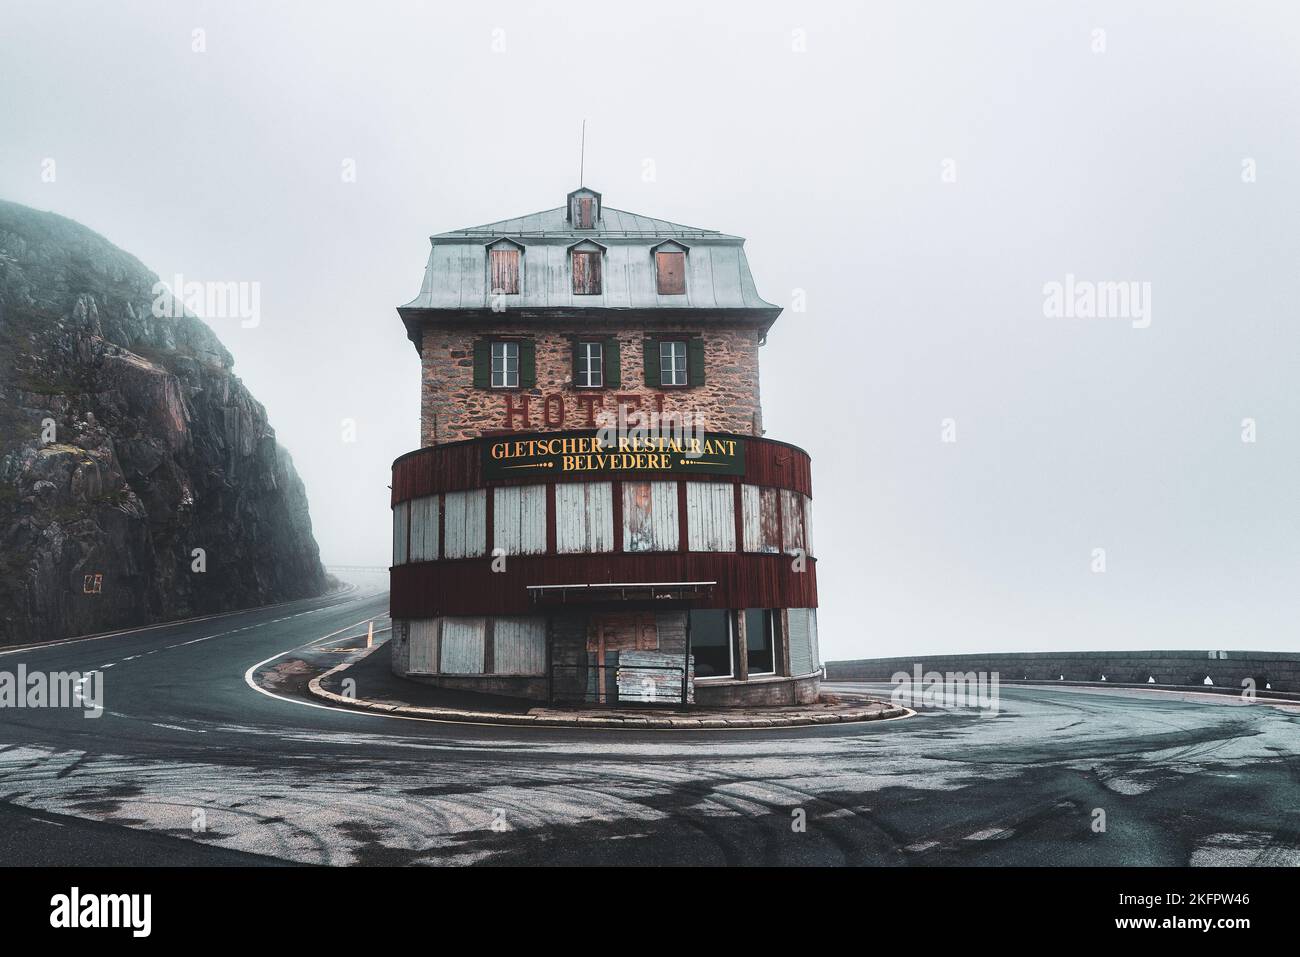 Hotel Belvédère – Obergoms VS, Switzerland - Atlas Obscura